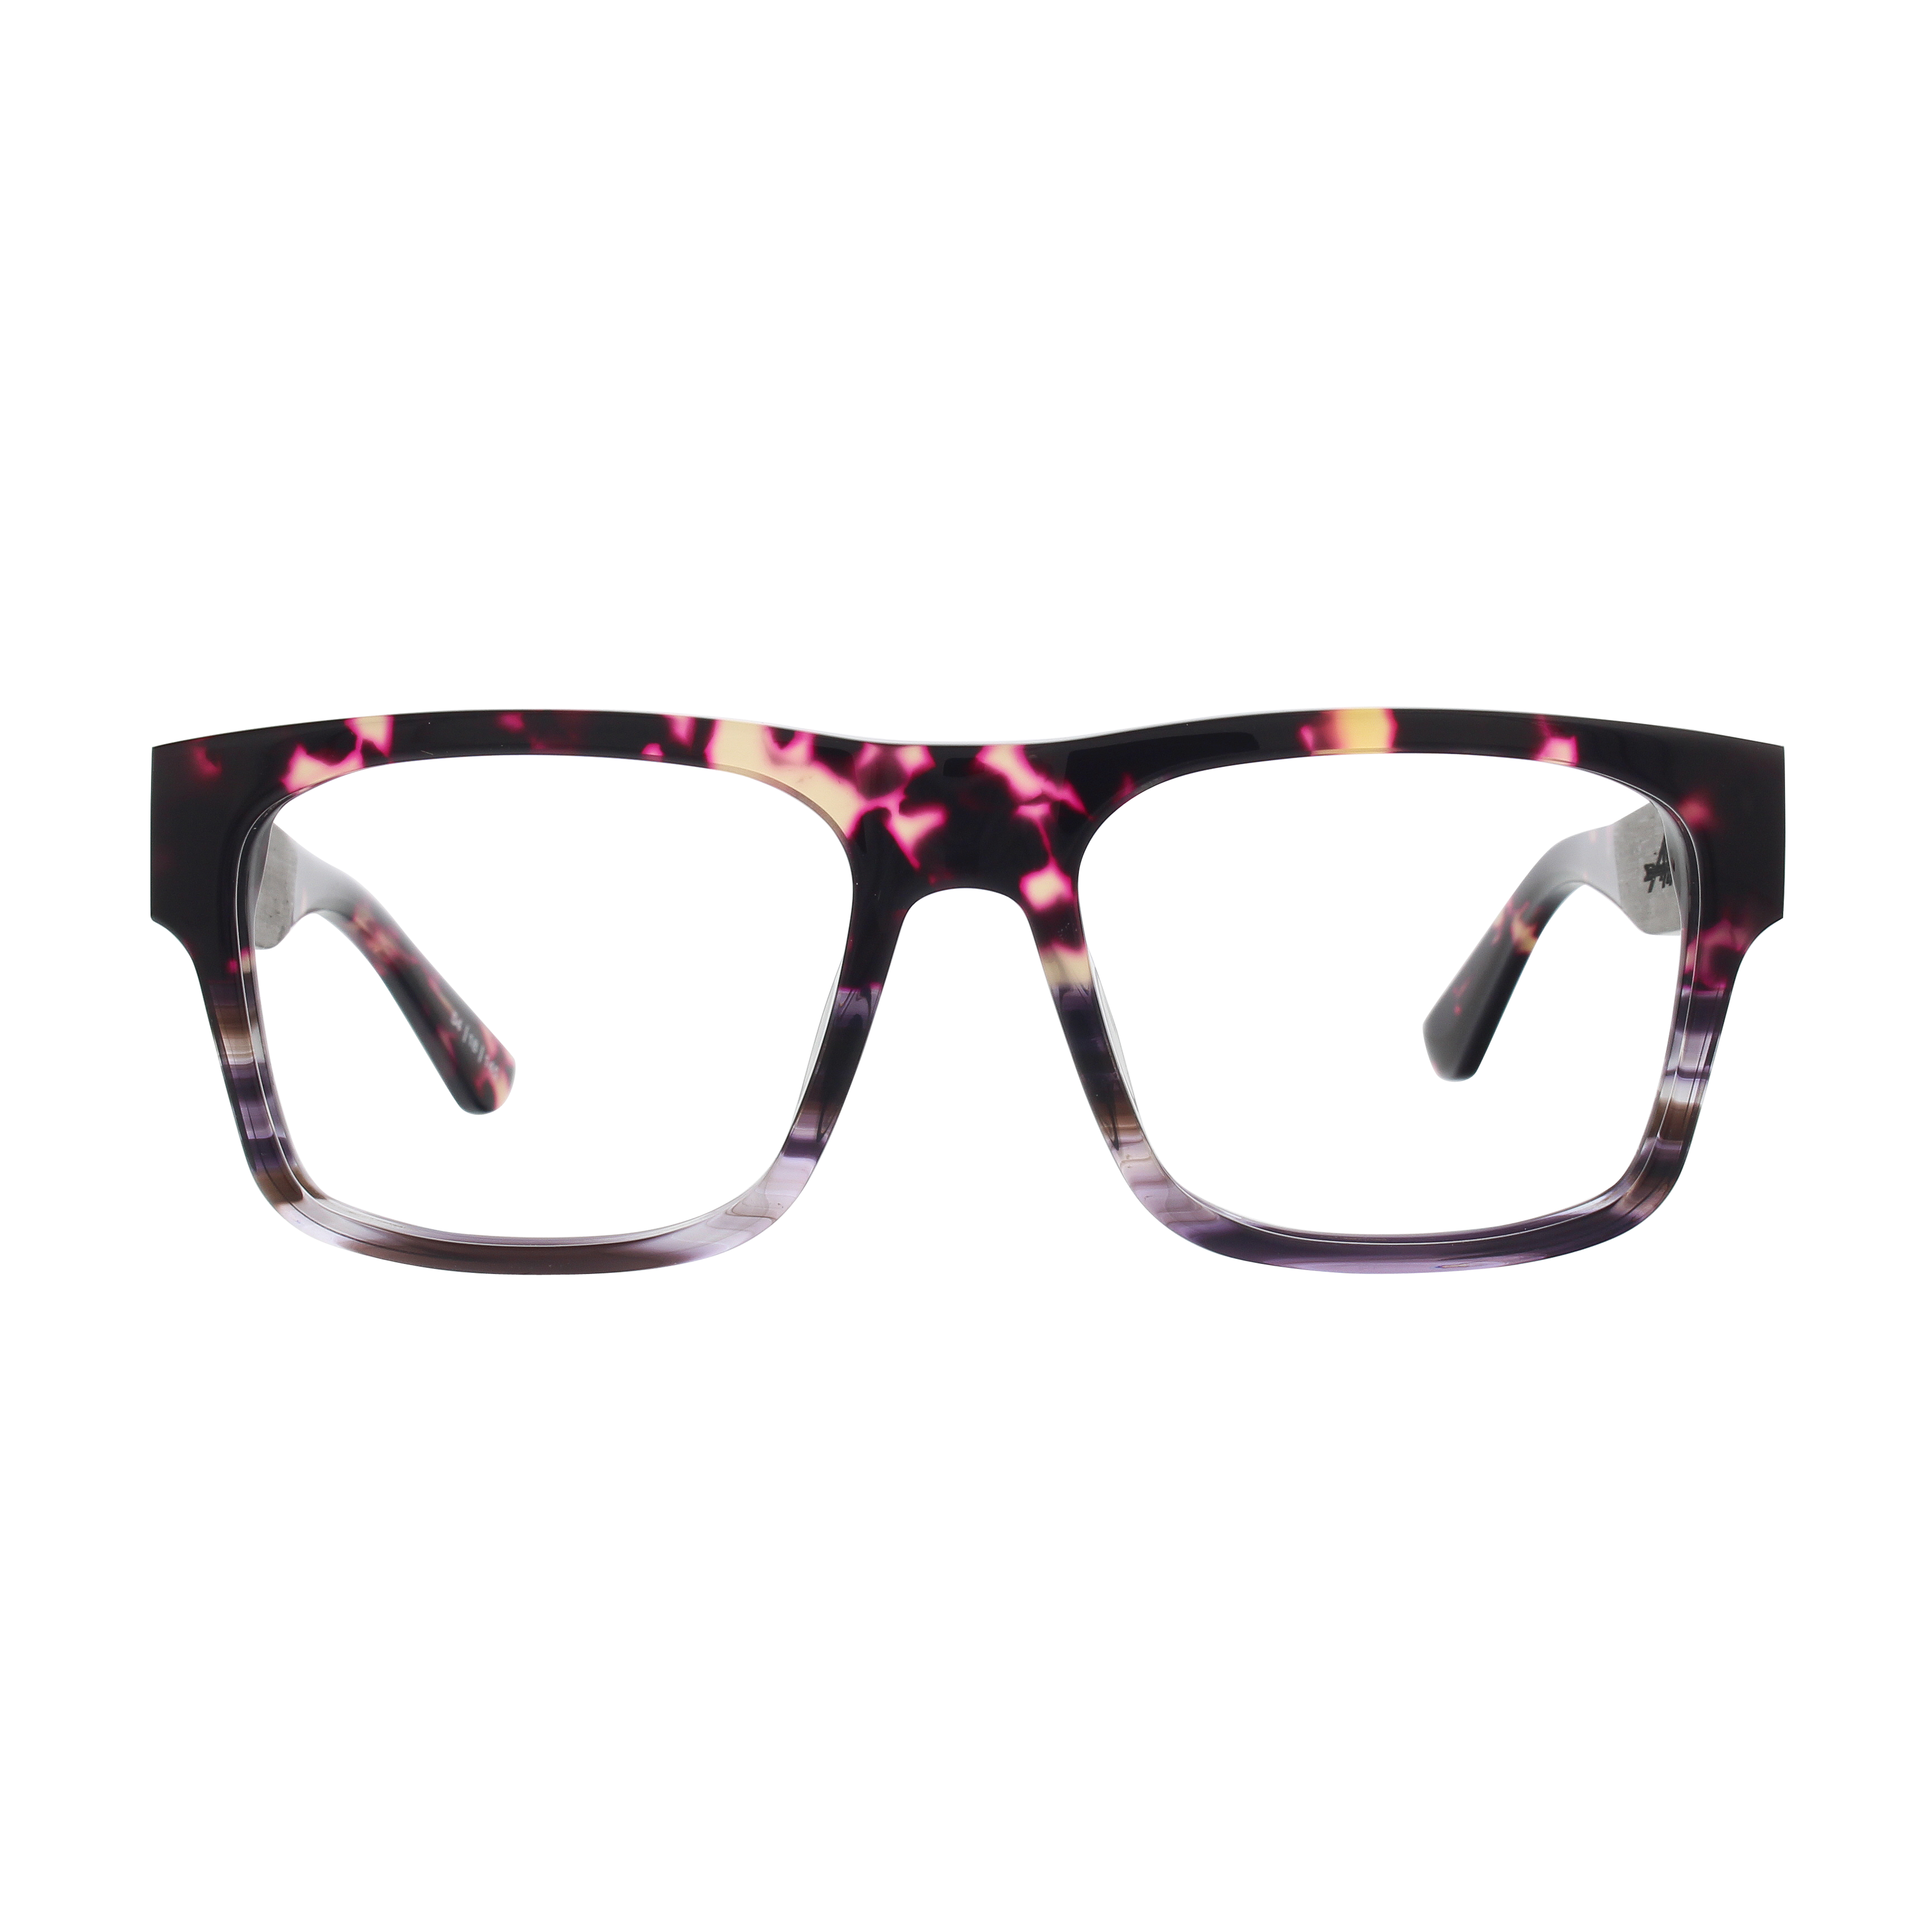 ARROW Frame - Rave - Eyeglasses Frame - Johnny Fly Eyewear 